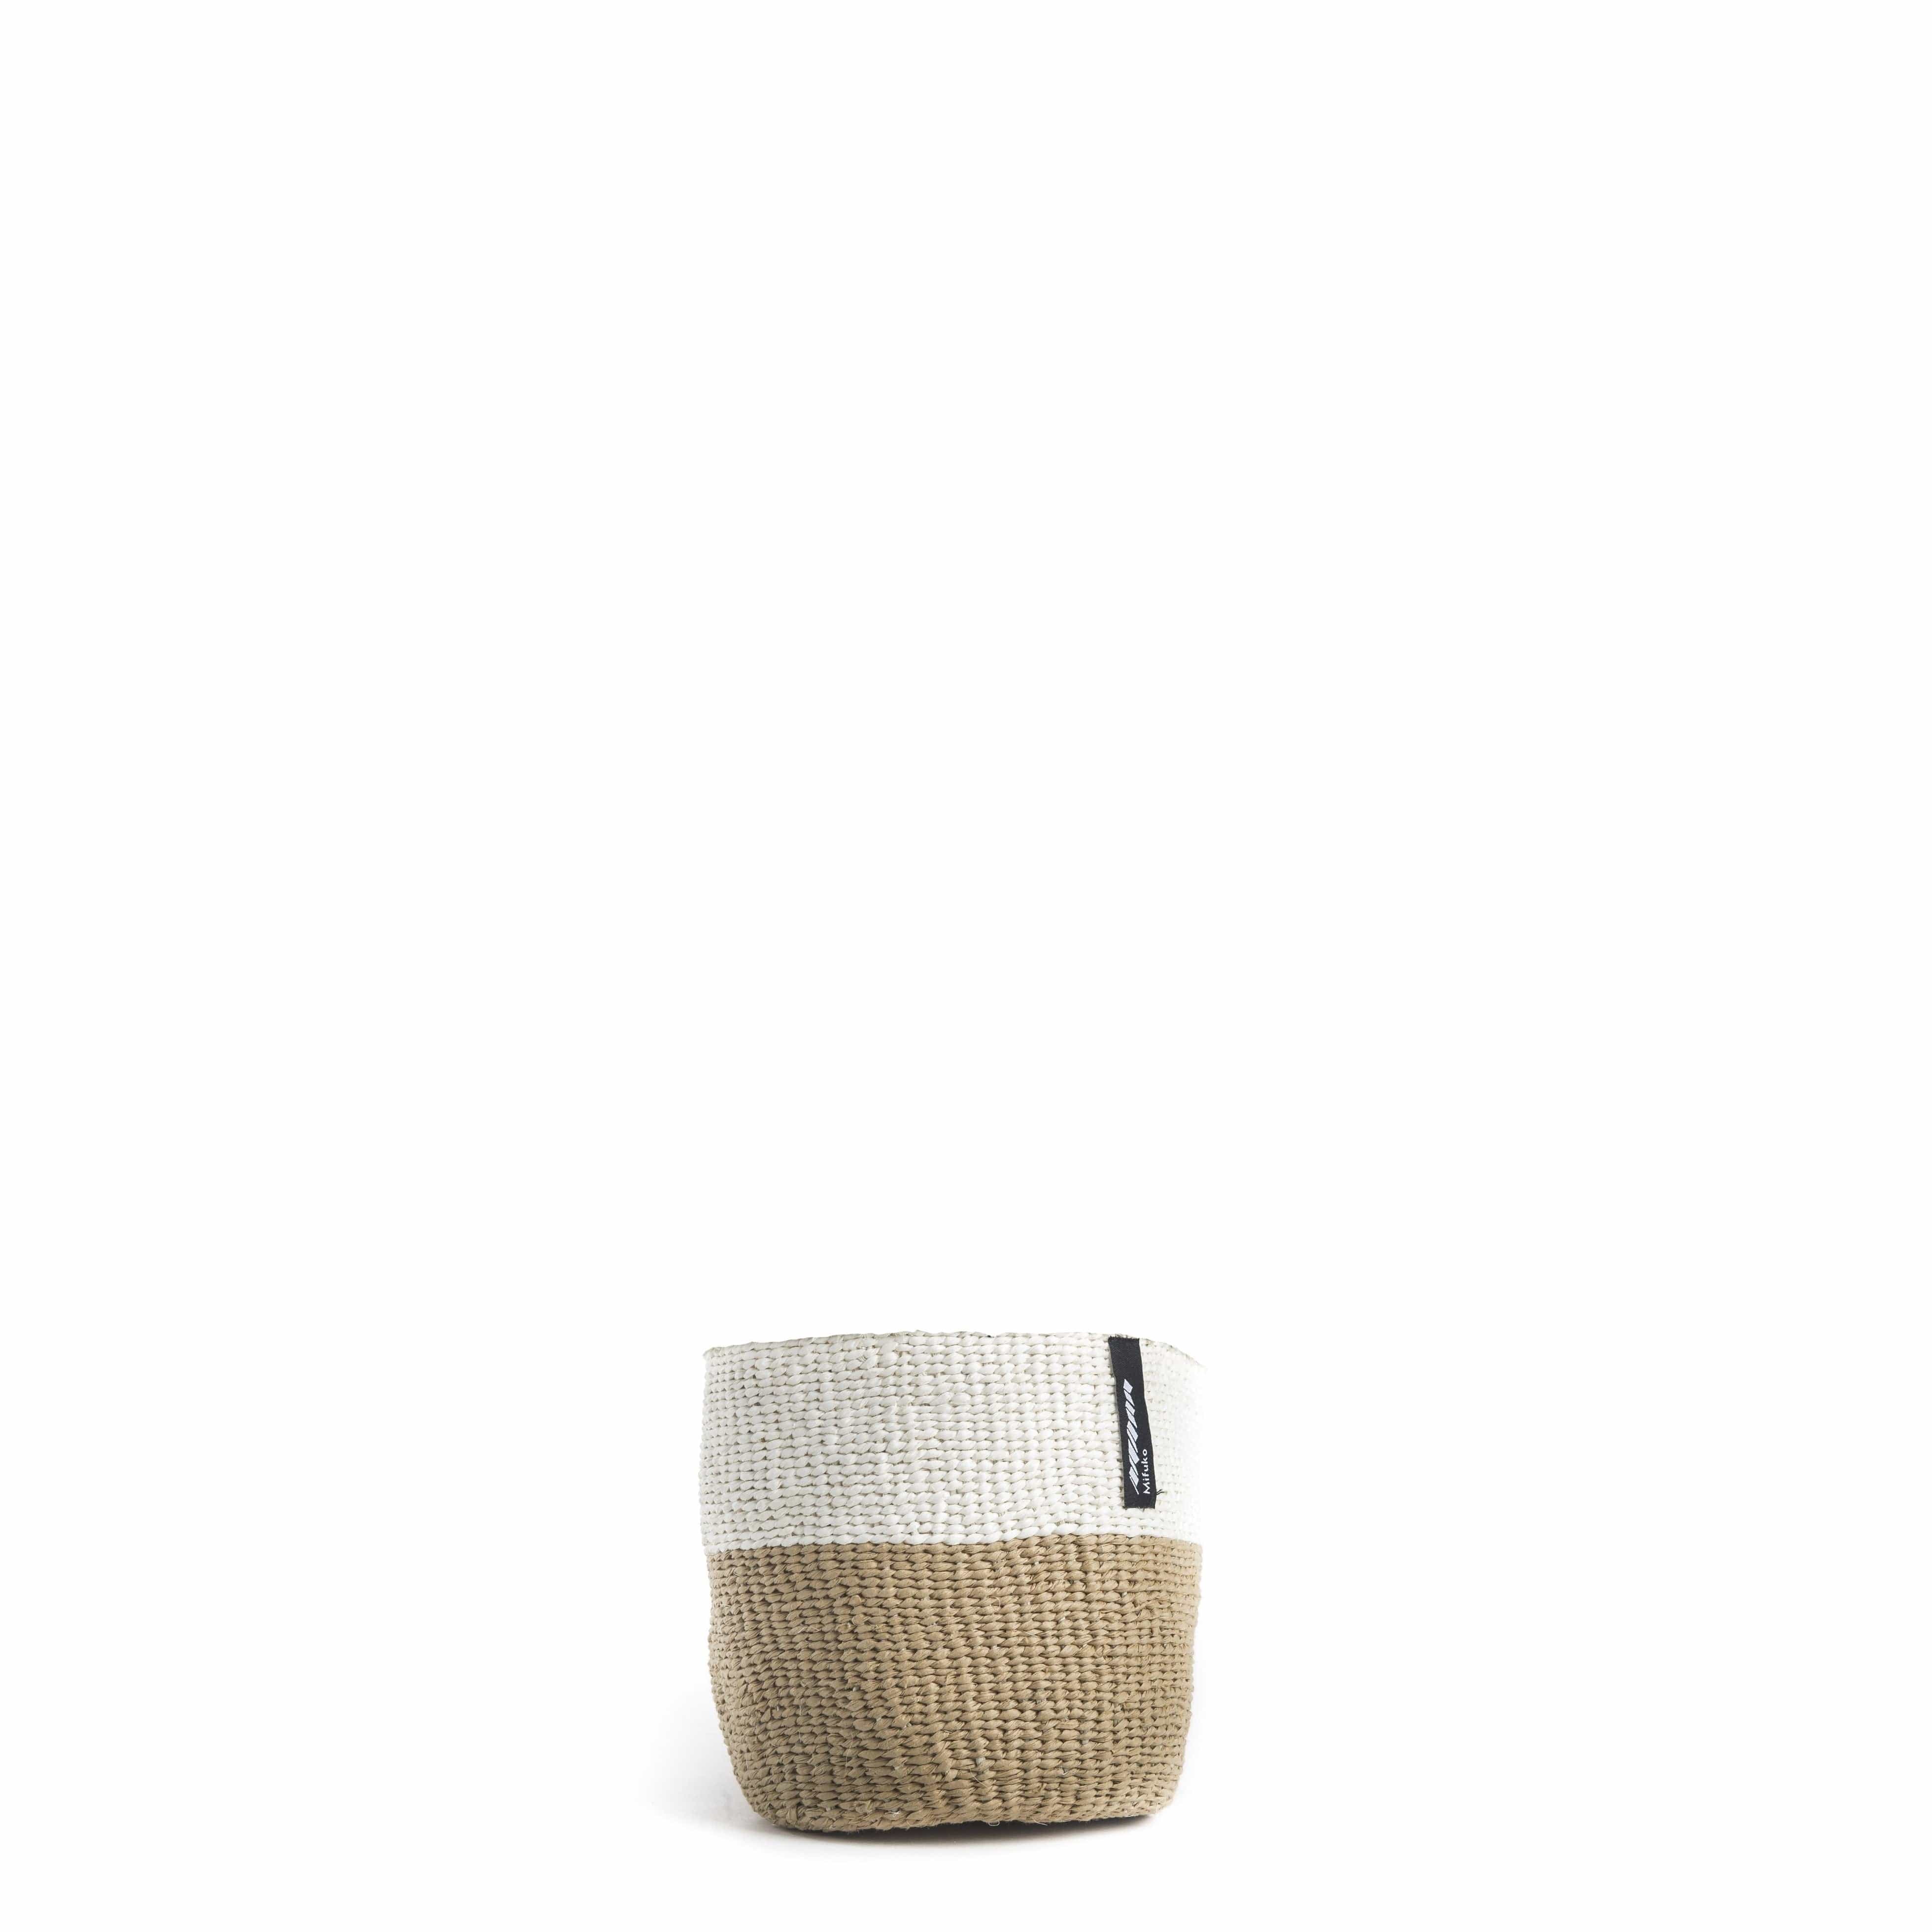 Mifuko Paper Small basket XS Kiondo basket | White and brown duo XS